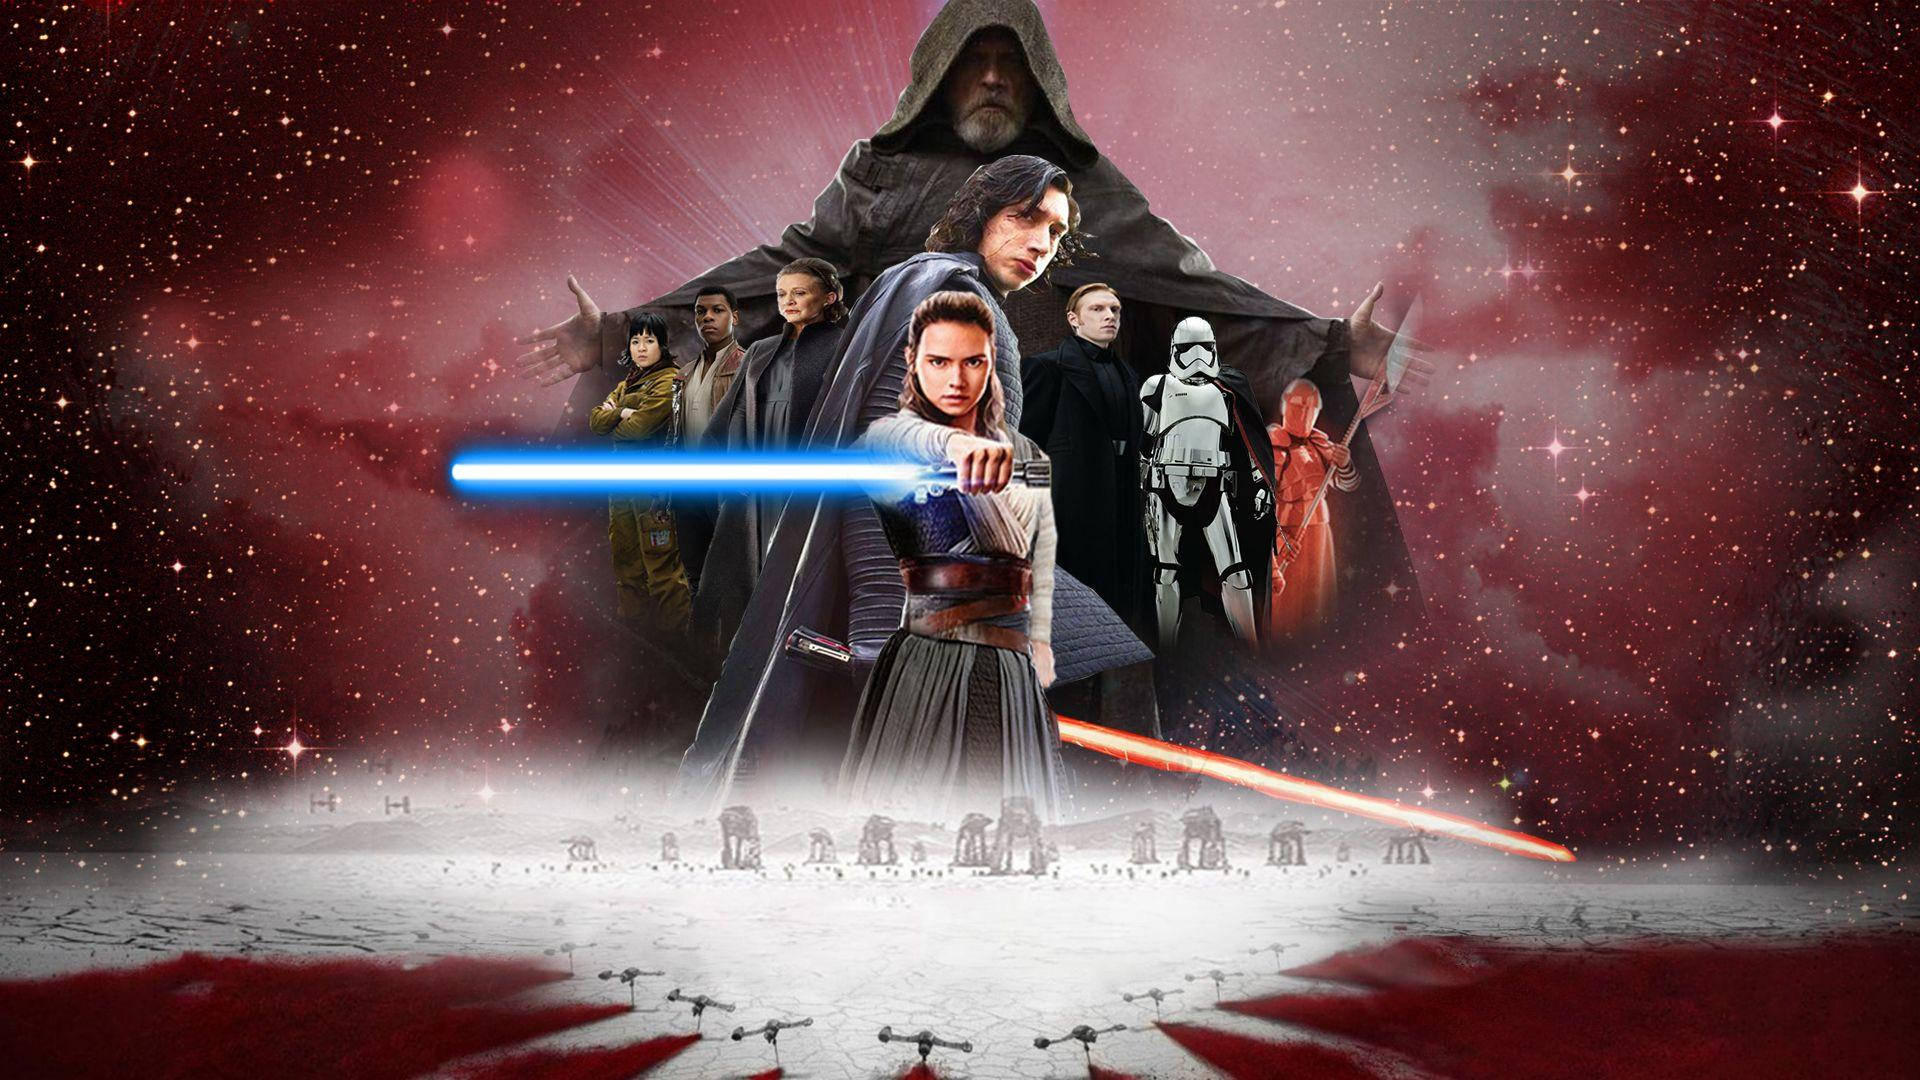 Amazing Poster The Last Jedi Star Wars Wallpaper